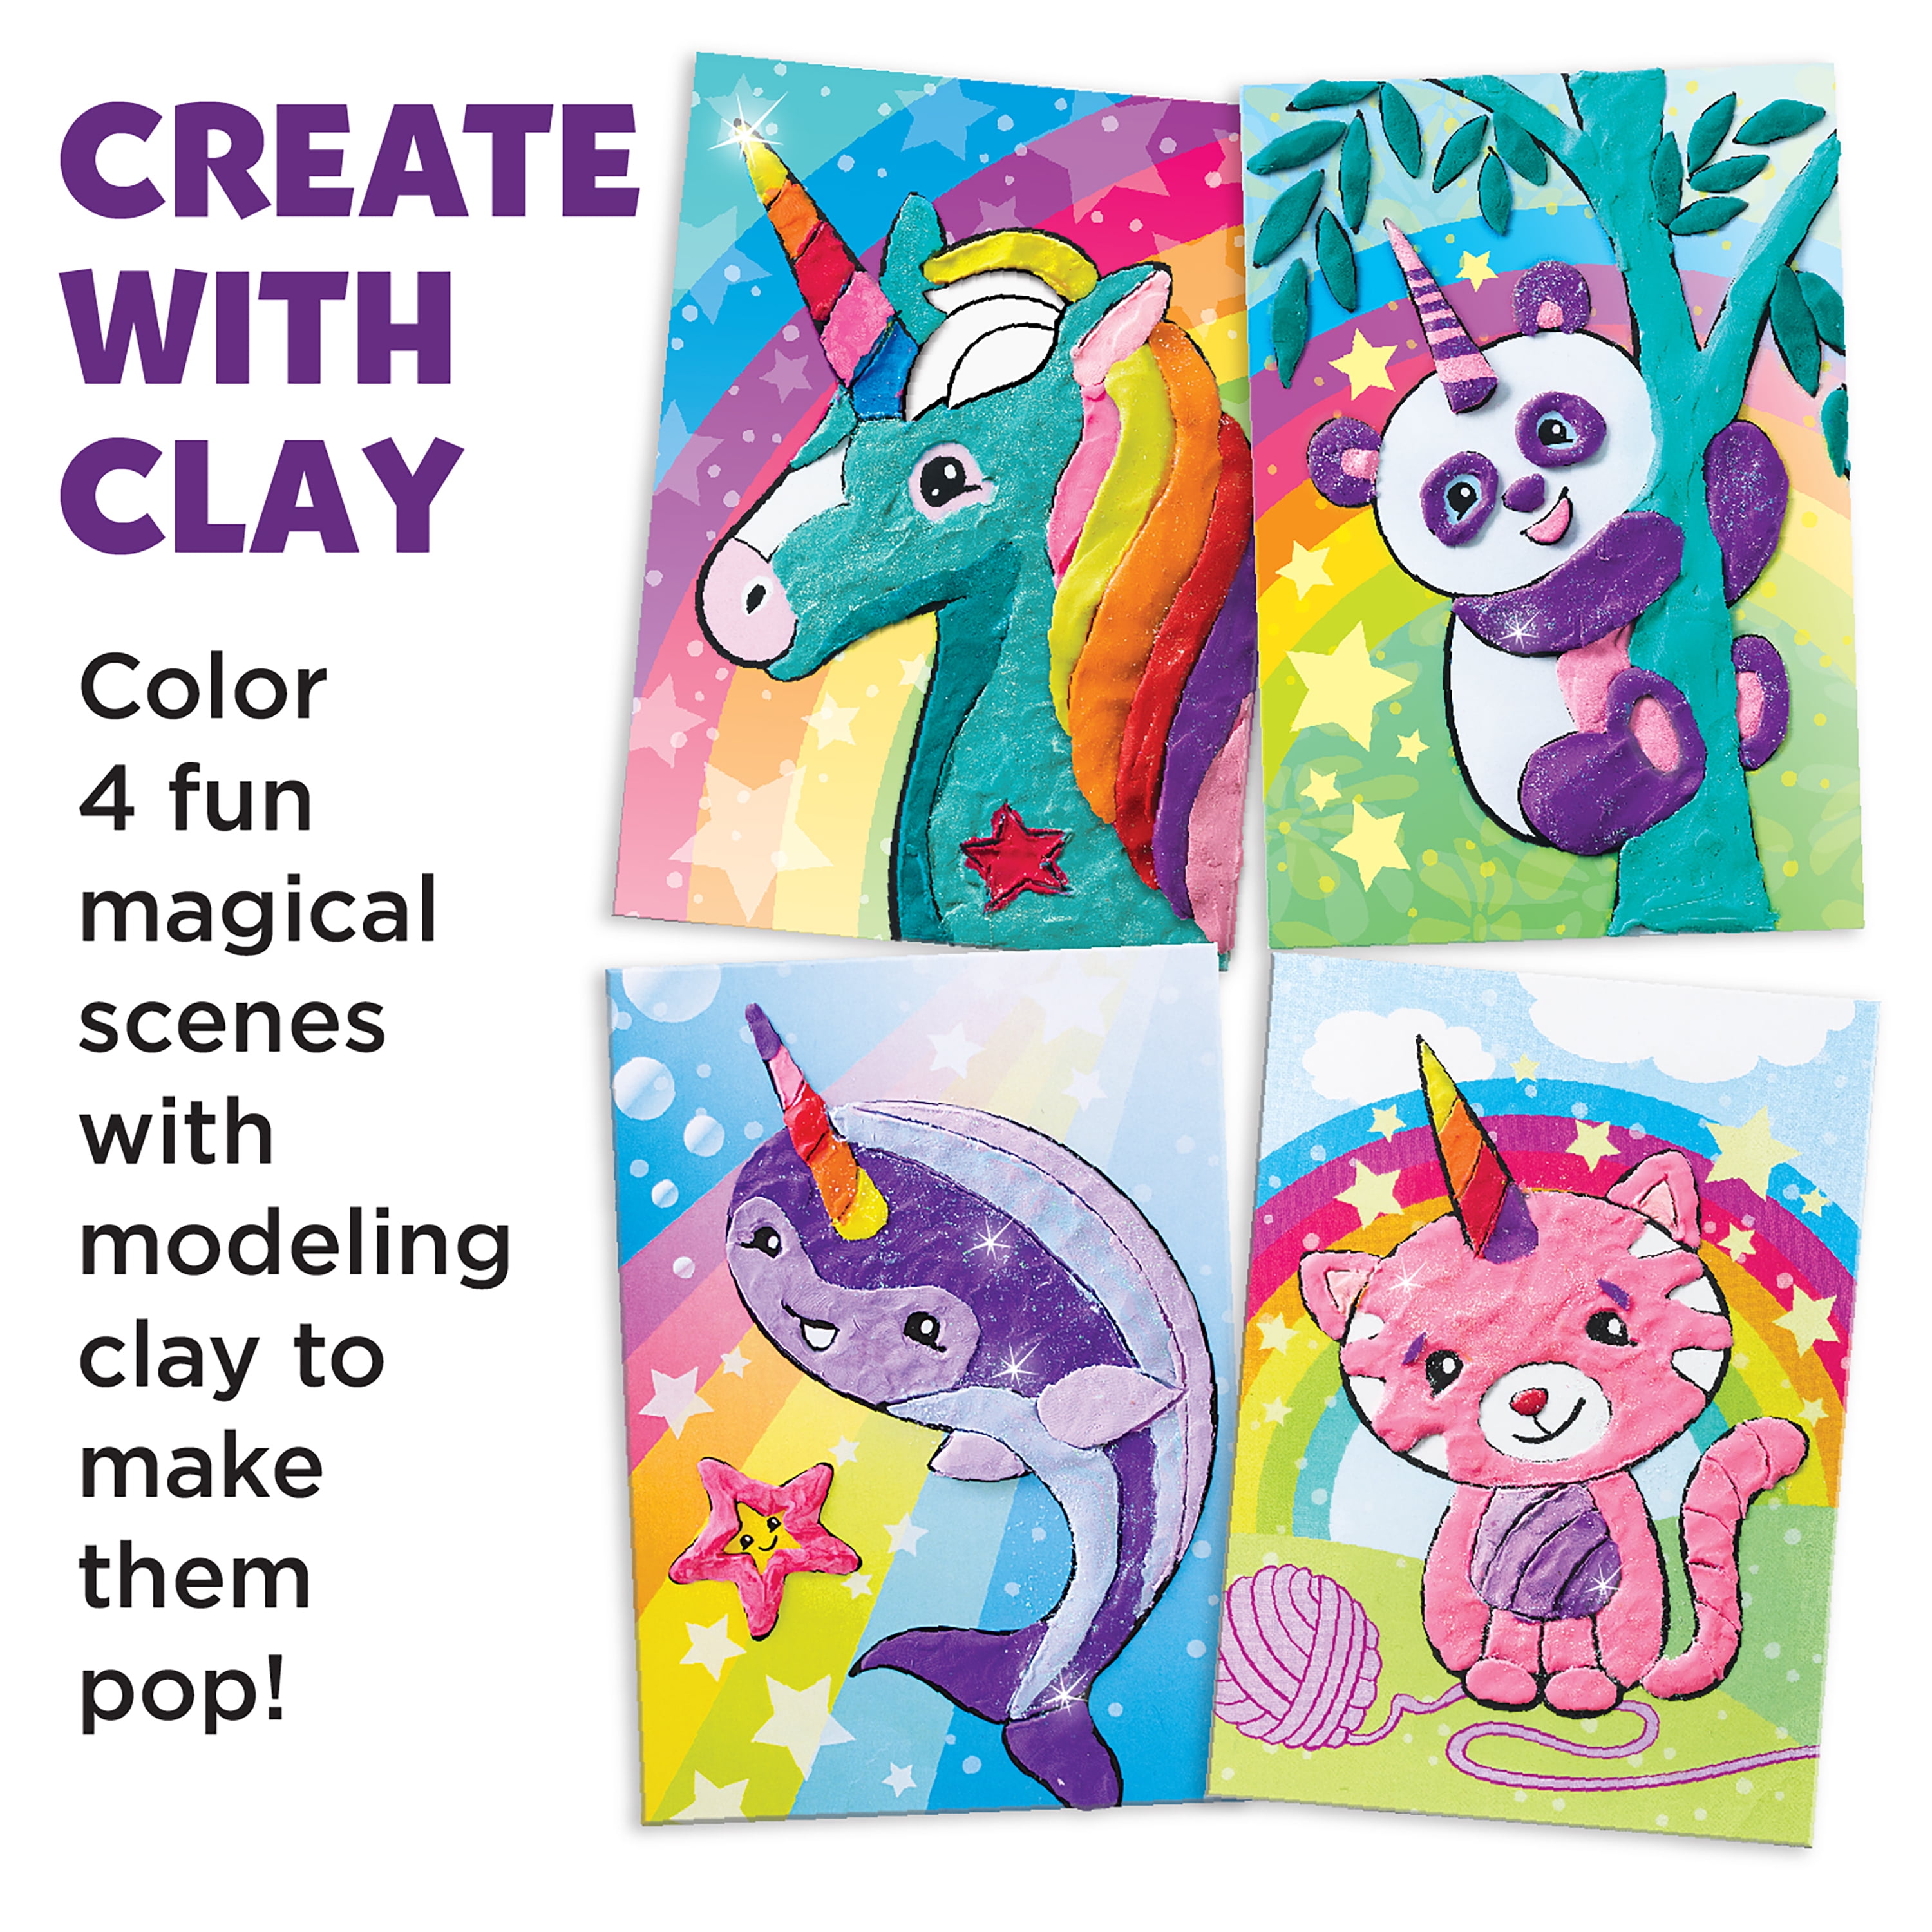 RAZY Unicorn Art Set Drawing Painting Sketching Colouring -  ART SET FOR KIDS